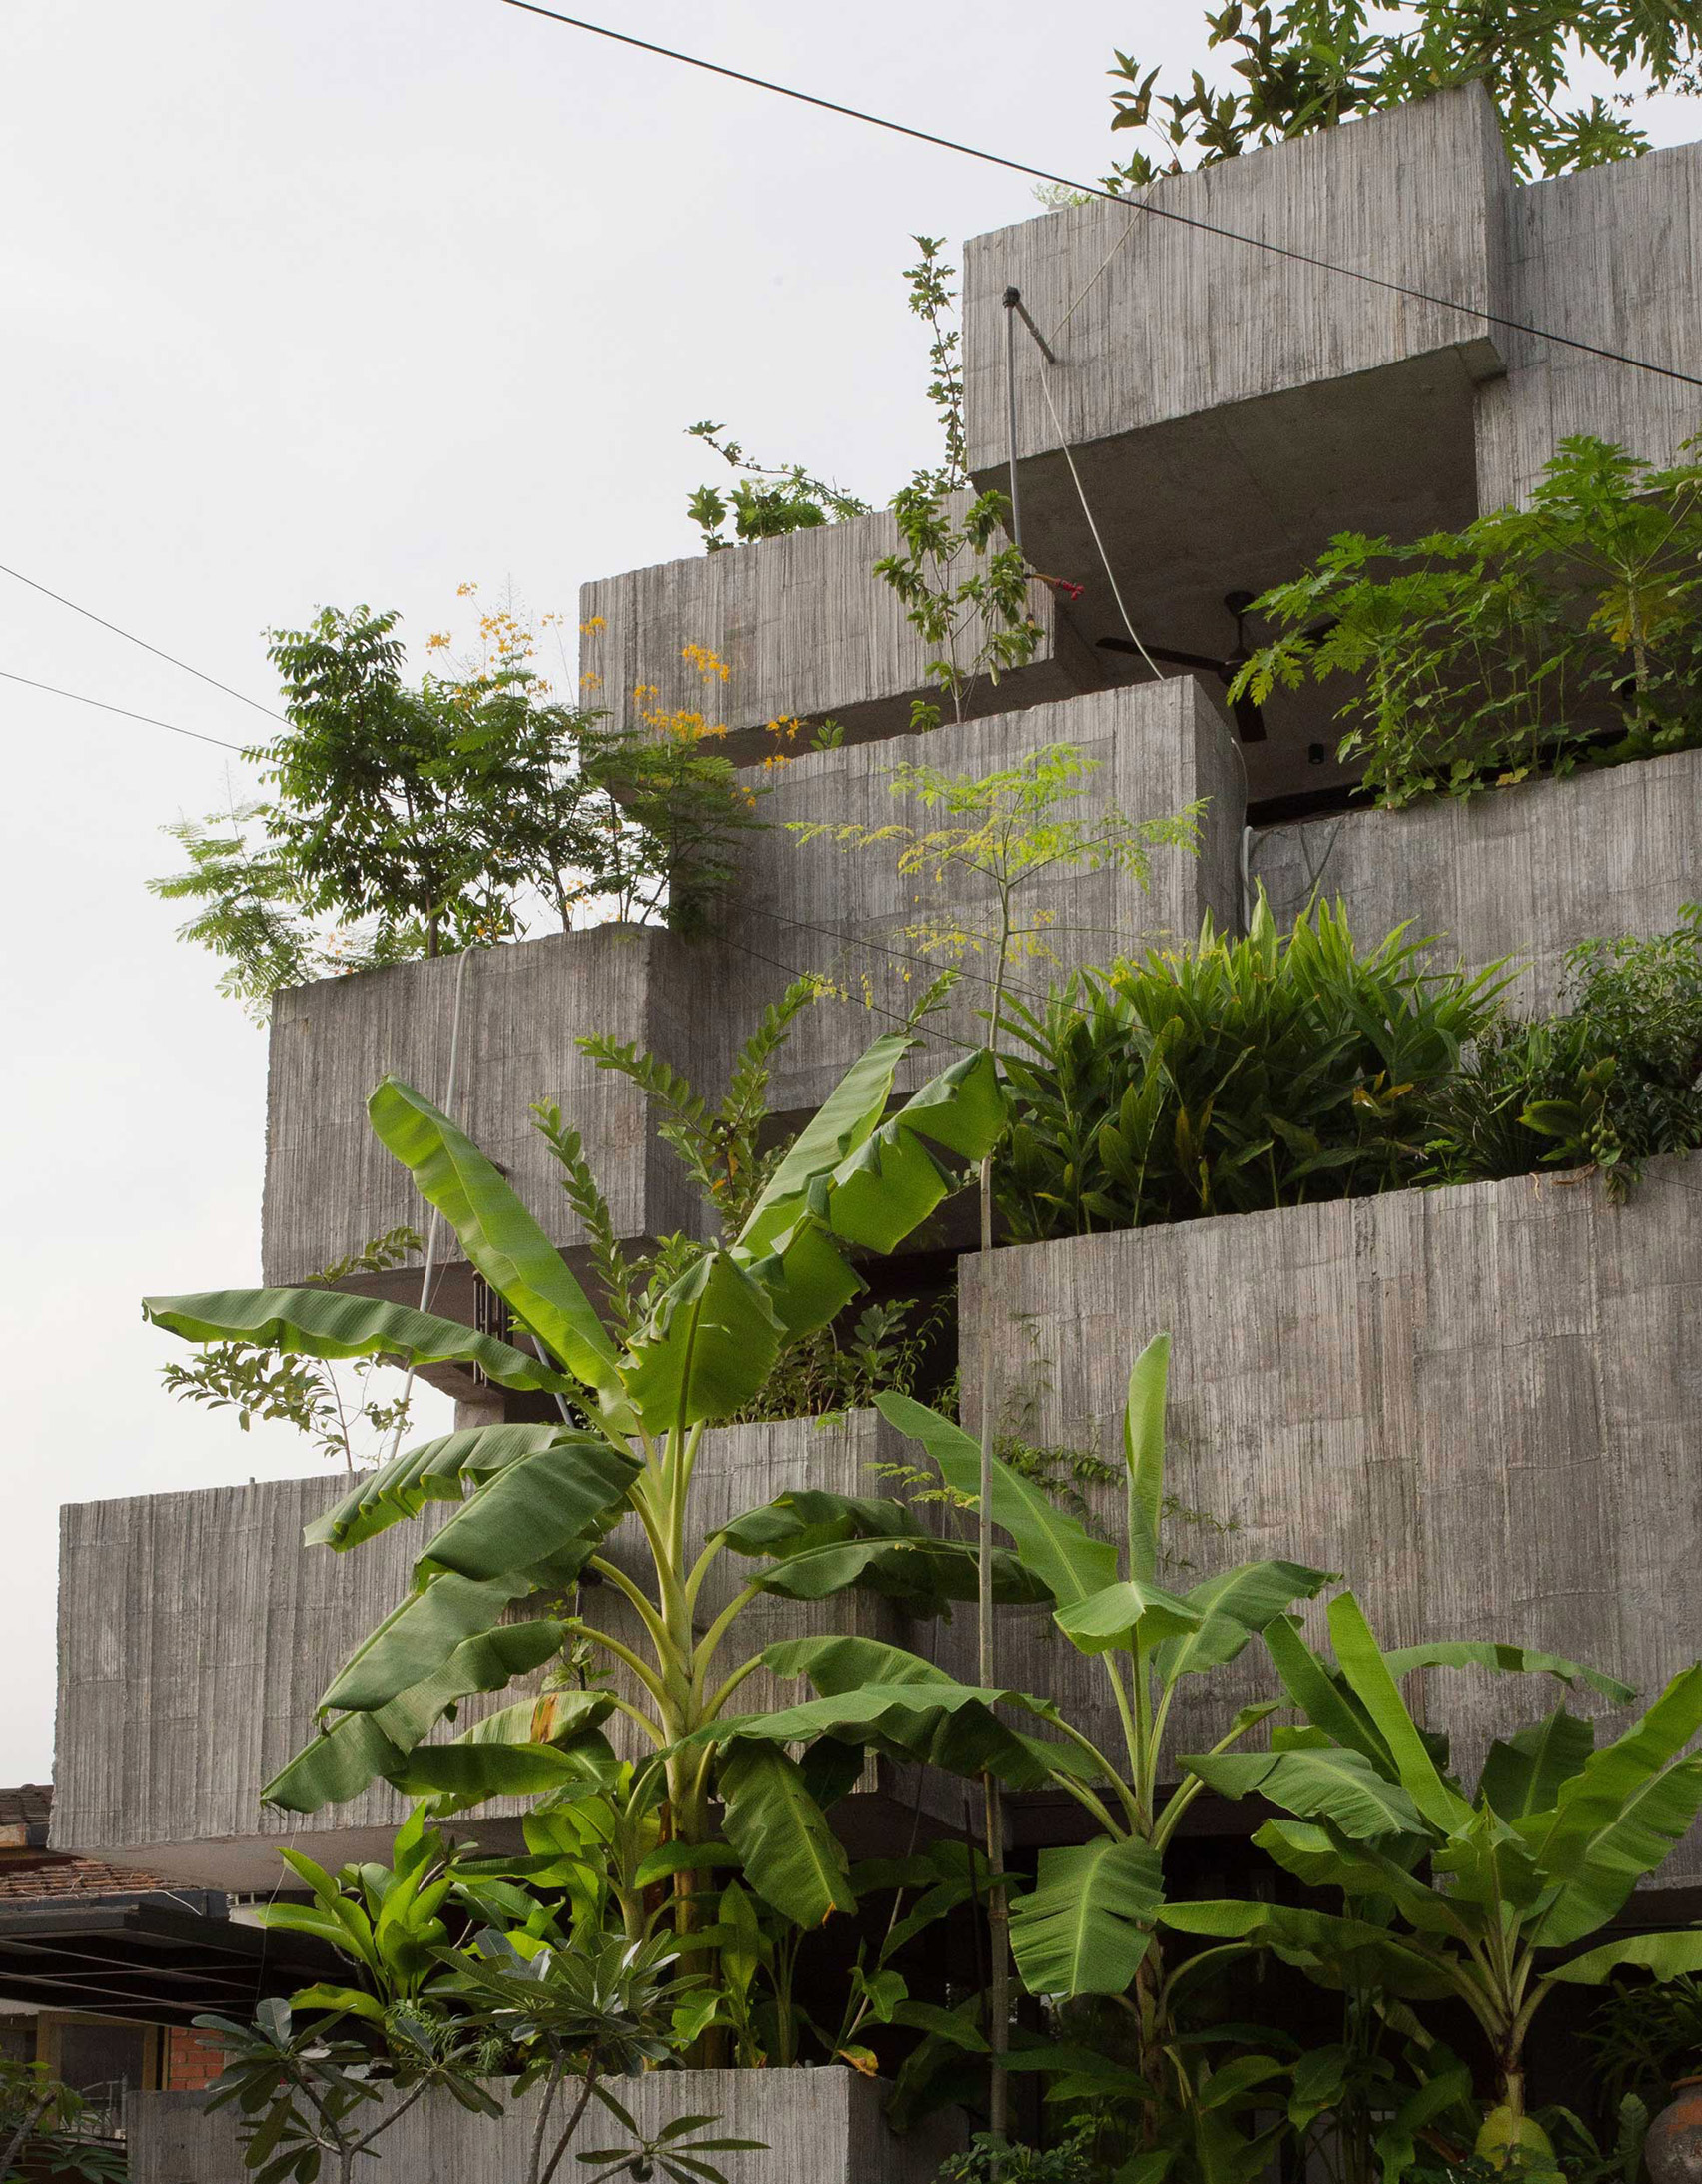 Facade of Planter Box House in Kuala Lumpur by Formzero